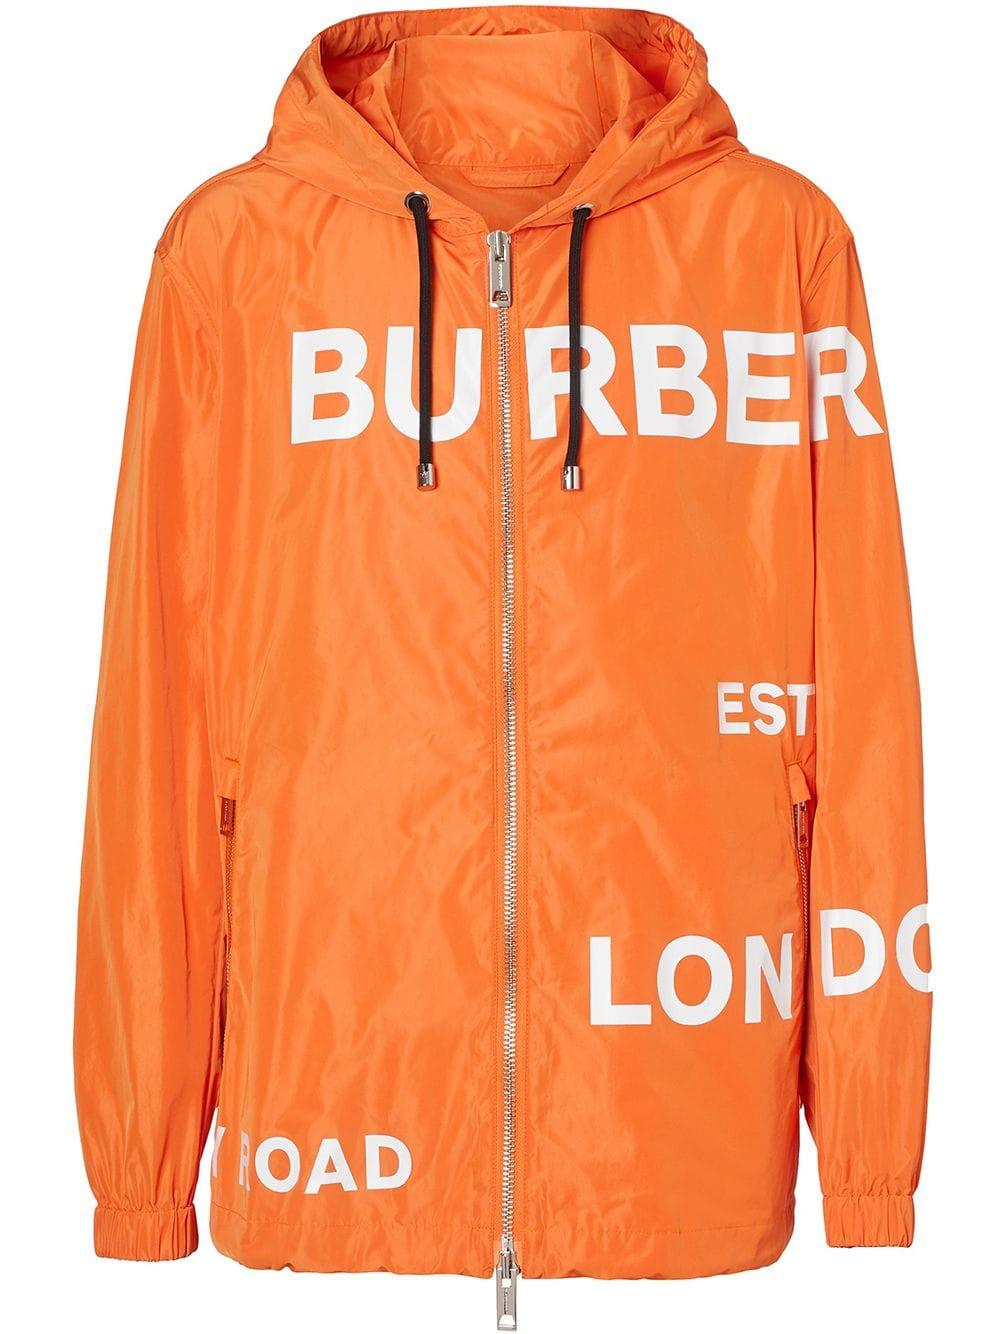 Burberry Synthetic Horseferry Print Nylon Hooded Jacket in Bright Orange  (Orange) for Men - Lyst